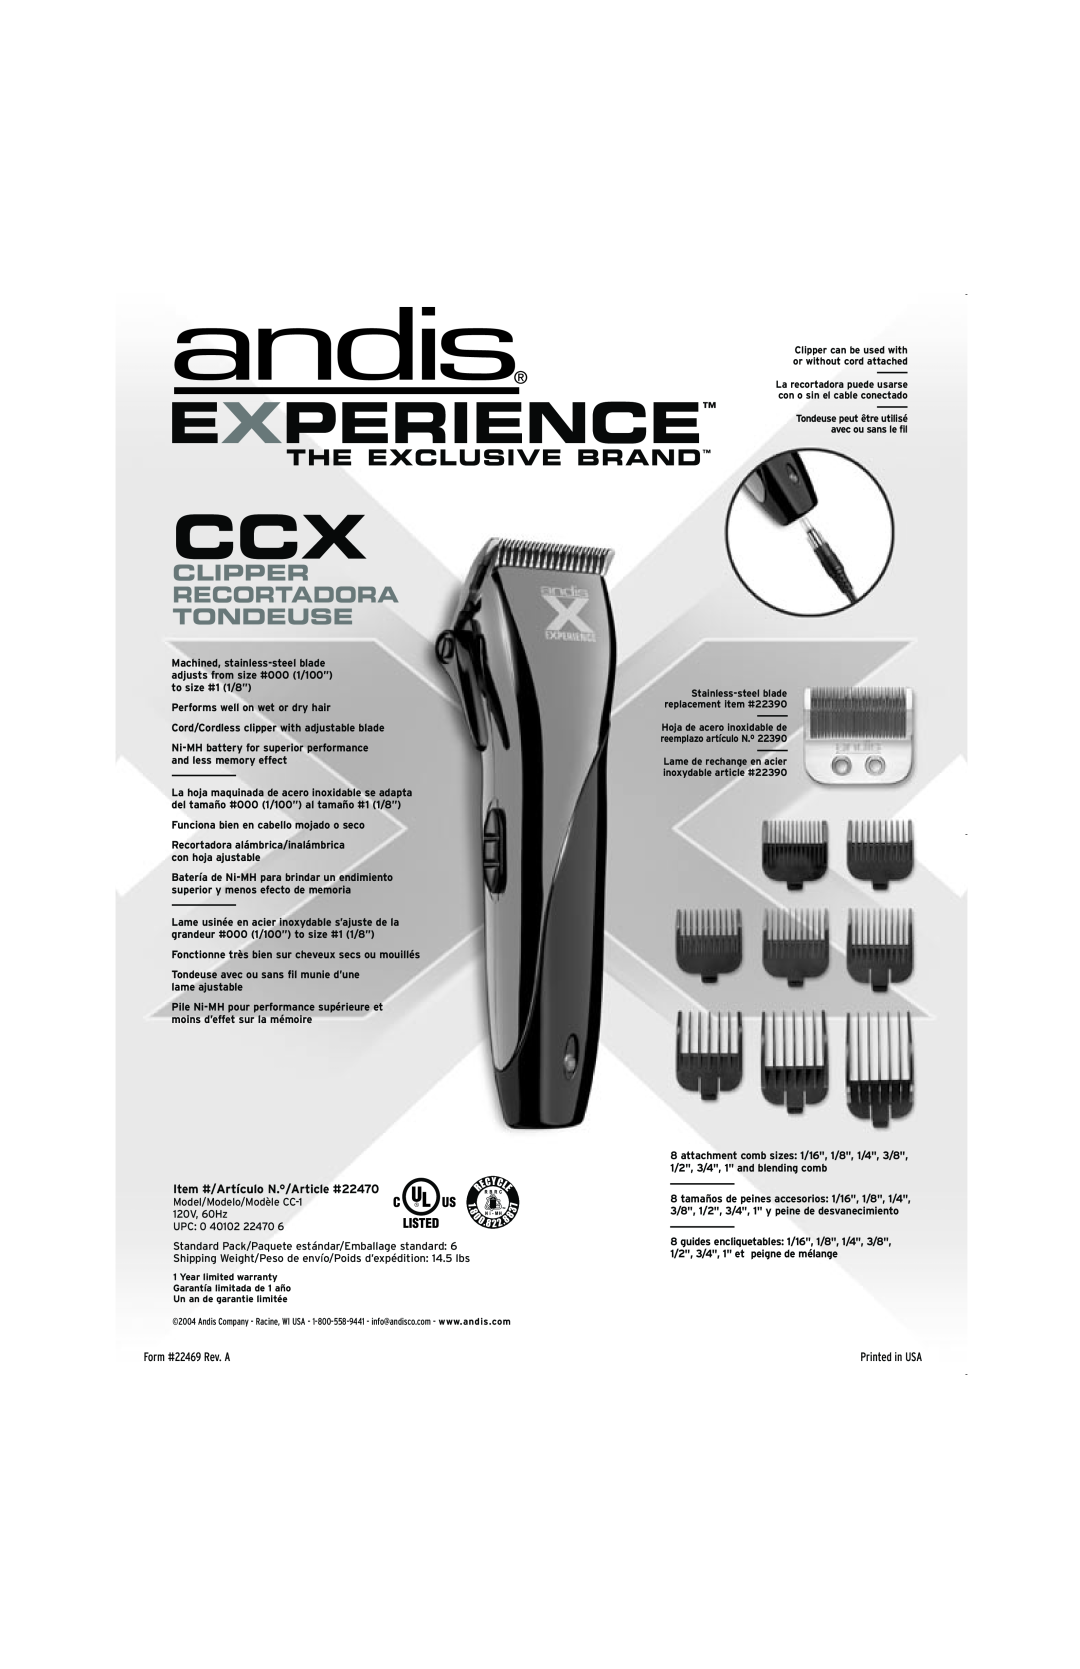 Andis Company Hair Clipper manual Experience, The Exclusive Brand, Clipper Recortadora Tondeuse, Form #22469 Rev. A 